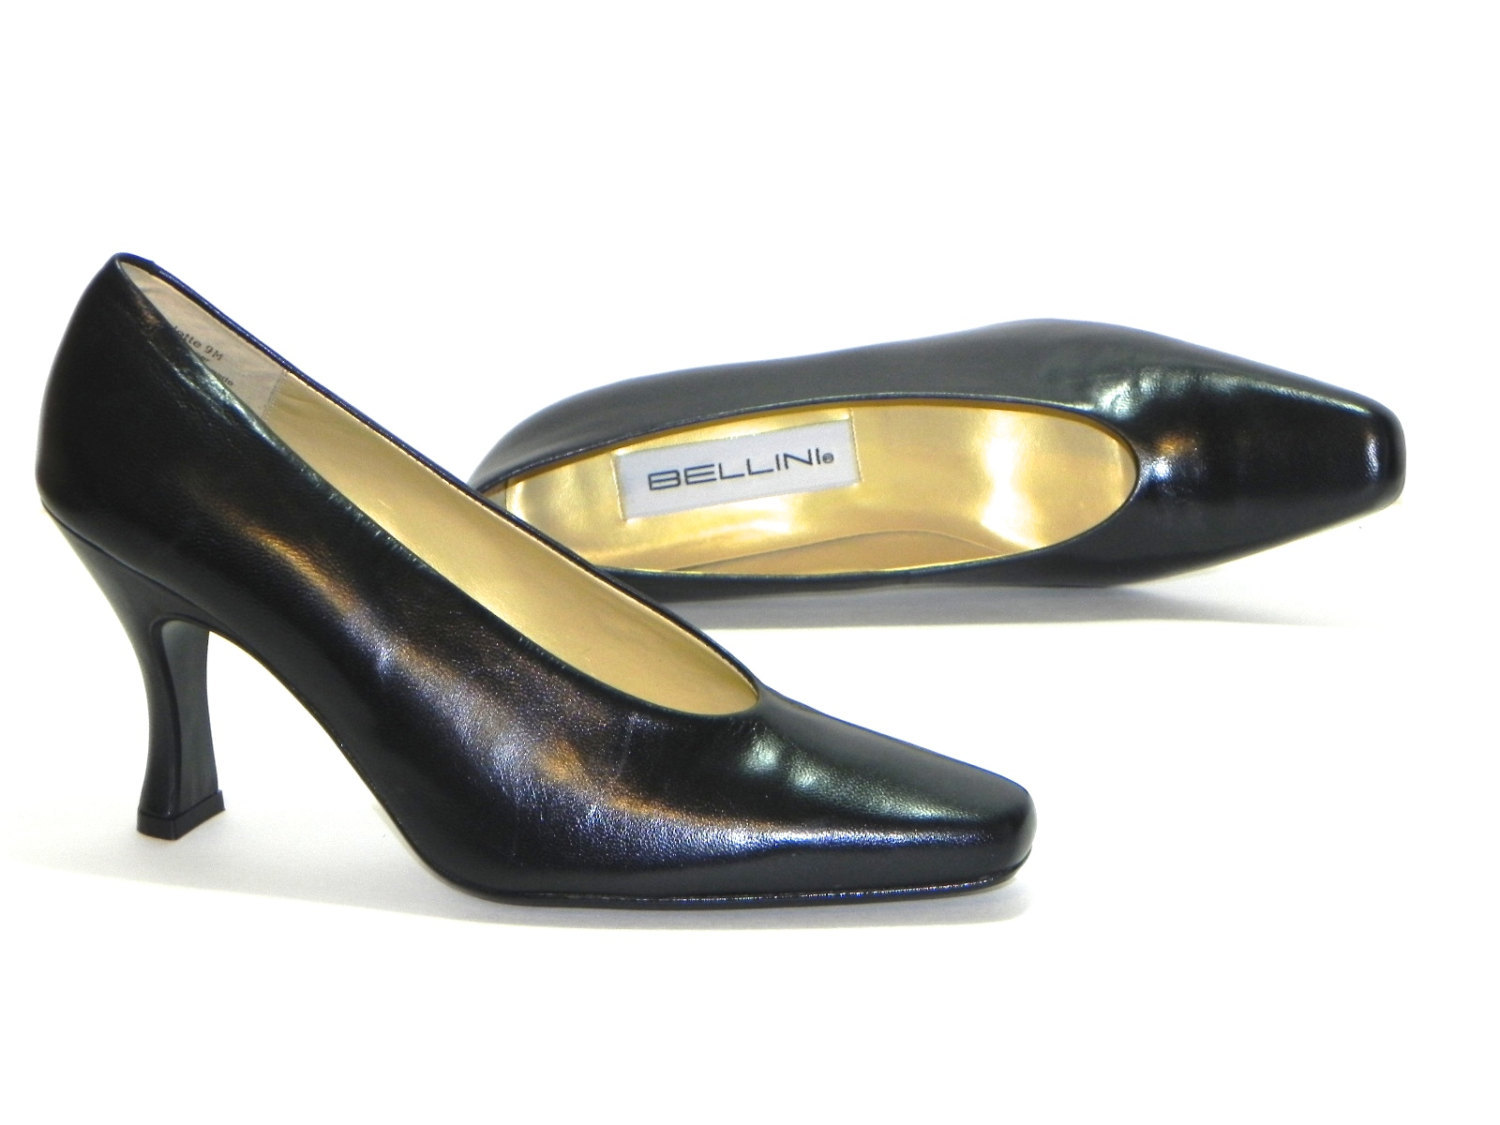 Vintage 1980s Bellini Shoes Black Leather Heel Pumps Colette Style New ...